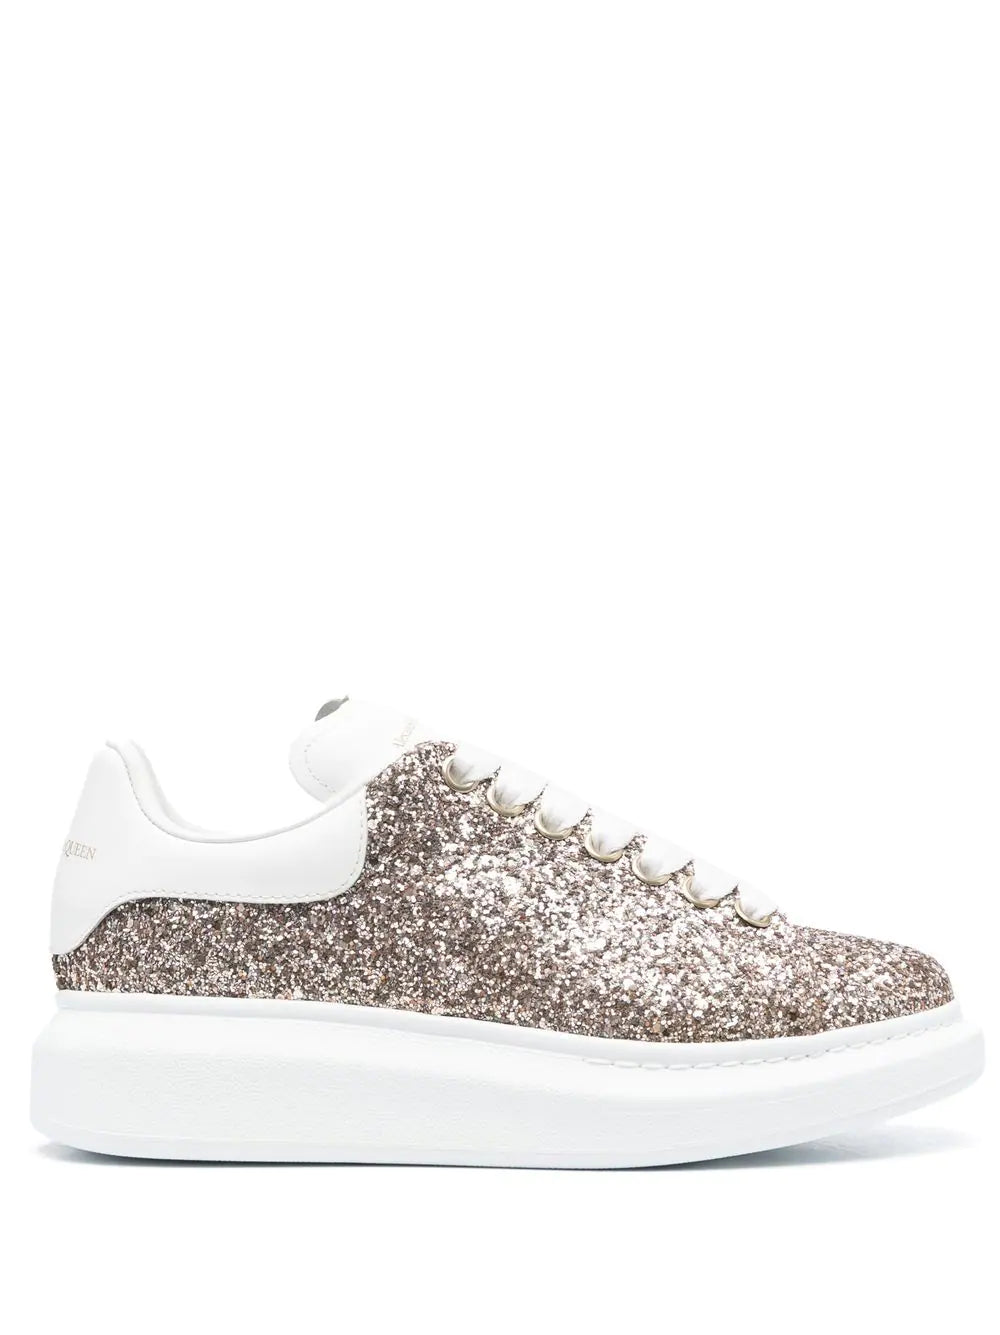 Buy Alexander McQueen Wmns Oversized Sneaker 'Crystal Embellished' - 733012  WICU6 1049 | GOAT